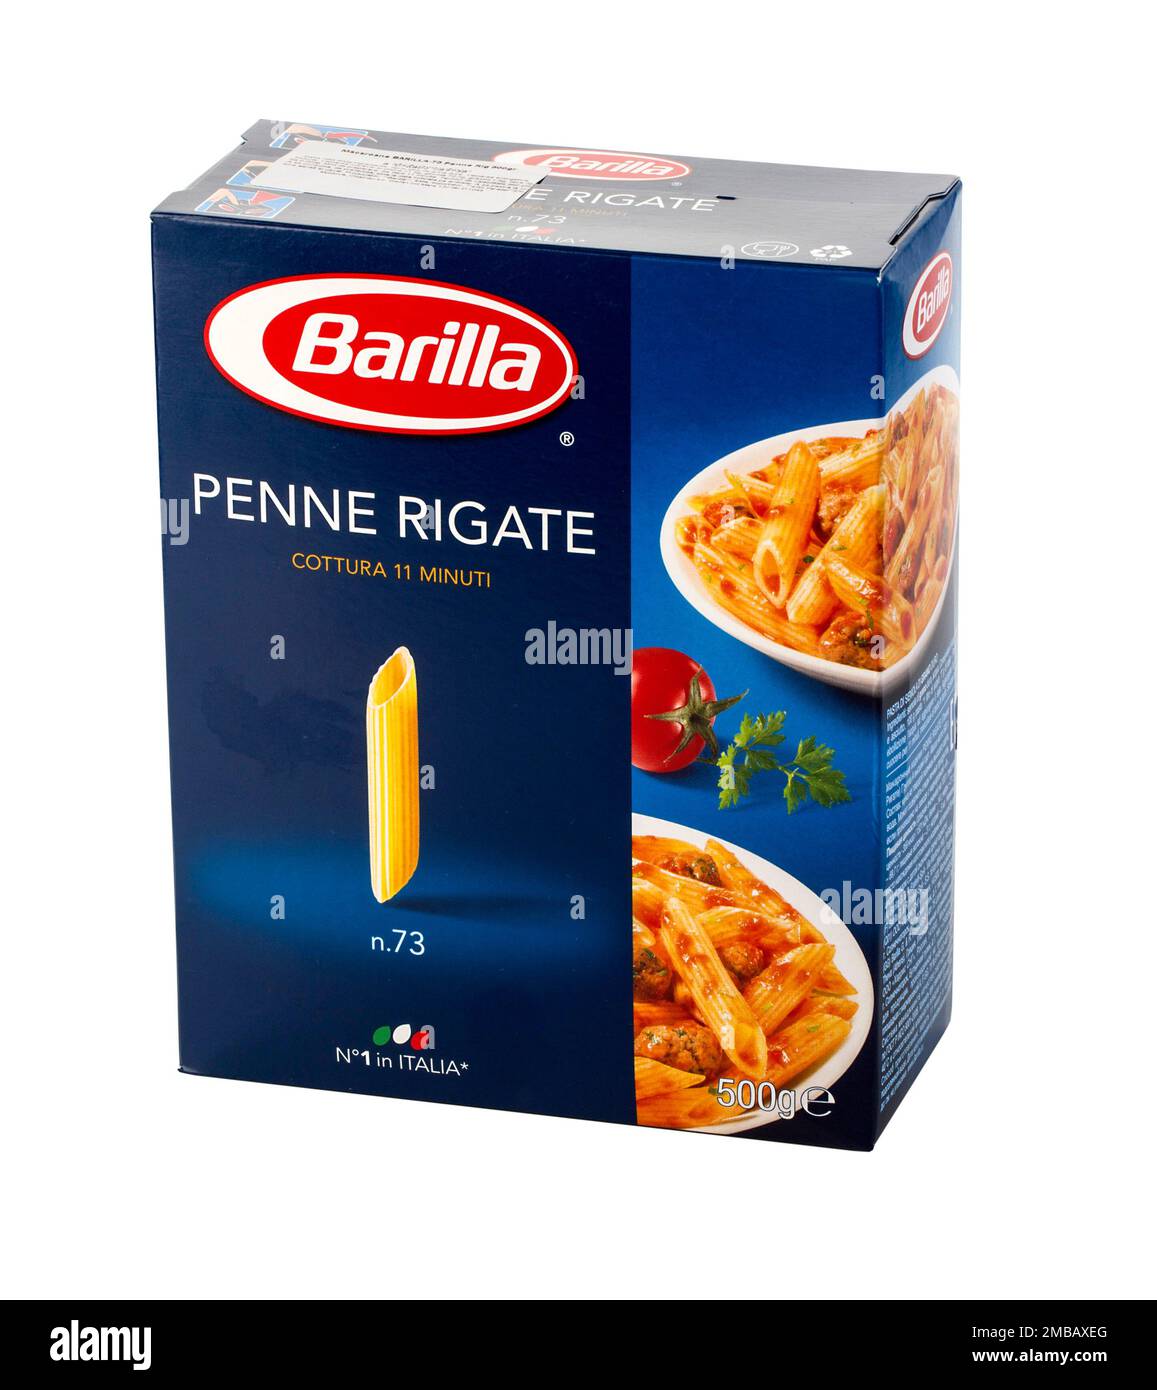 https://c8.alamy.com/comp/2MBAXEG/chisinau-moldova-march-25-2016-one-pound-box-of-barilla-brand-pasta-pennette-rigate-an-enriched-macaroni-product-2MBAXEG.jpg